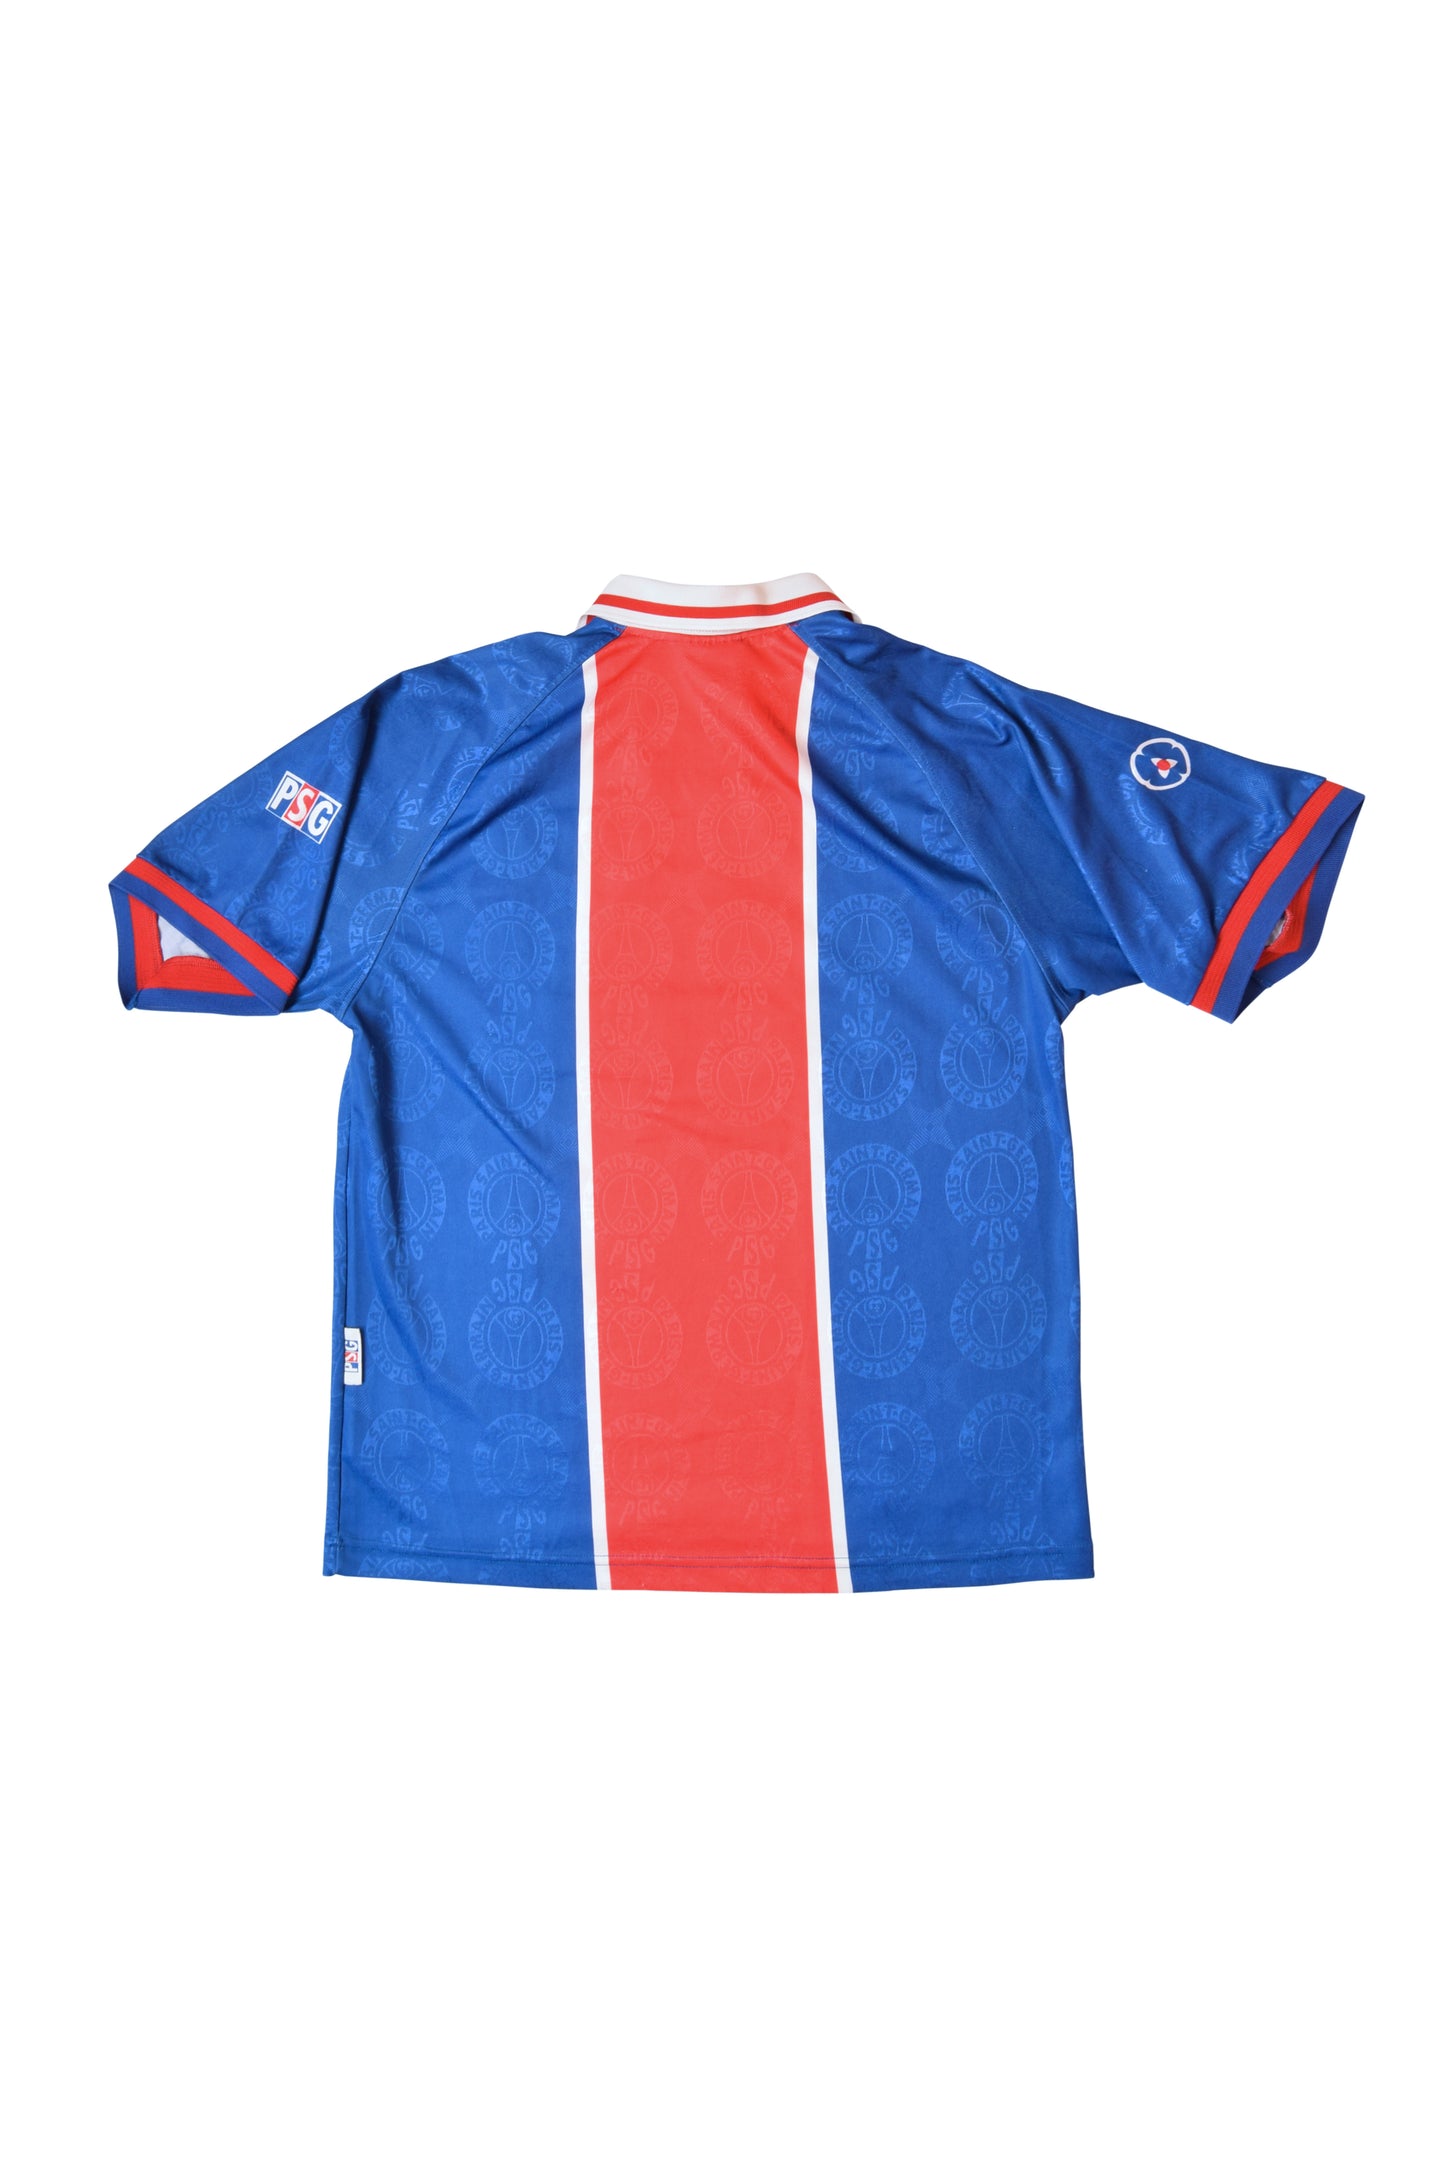 Vintage Nike Premier PSG Paris Saint Germain 1996 - 1997 Home Football Shirt Size L